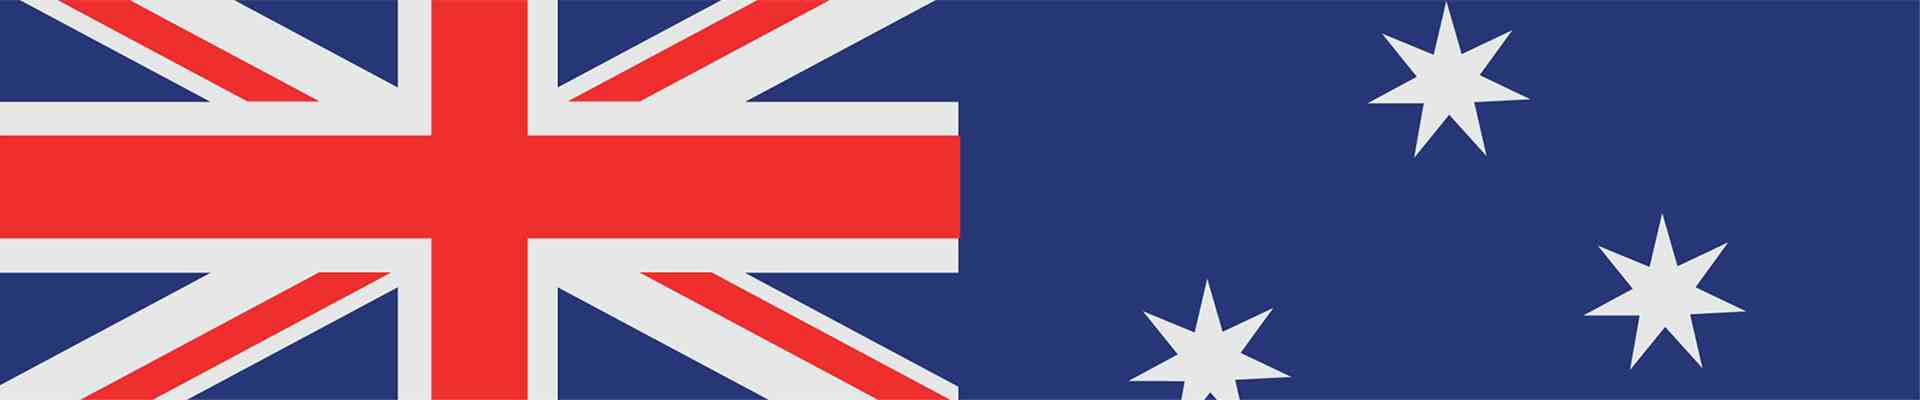 Rangers vs Panthers canlı akışı - Avustralya bayrağı